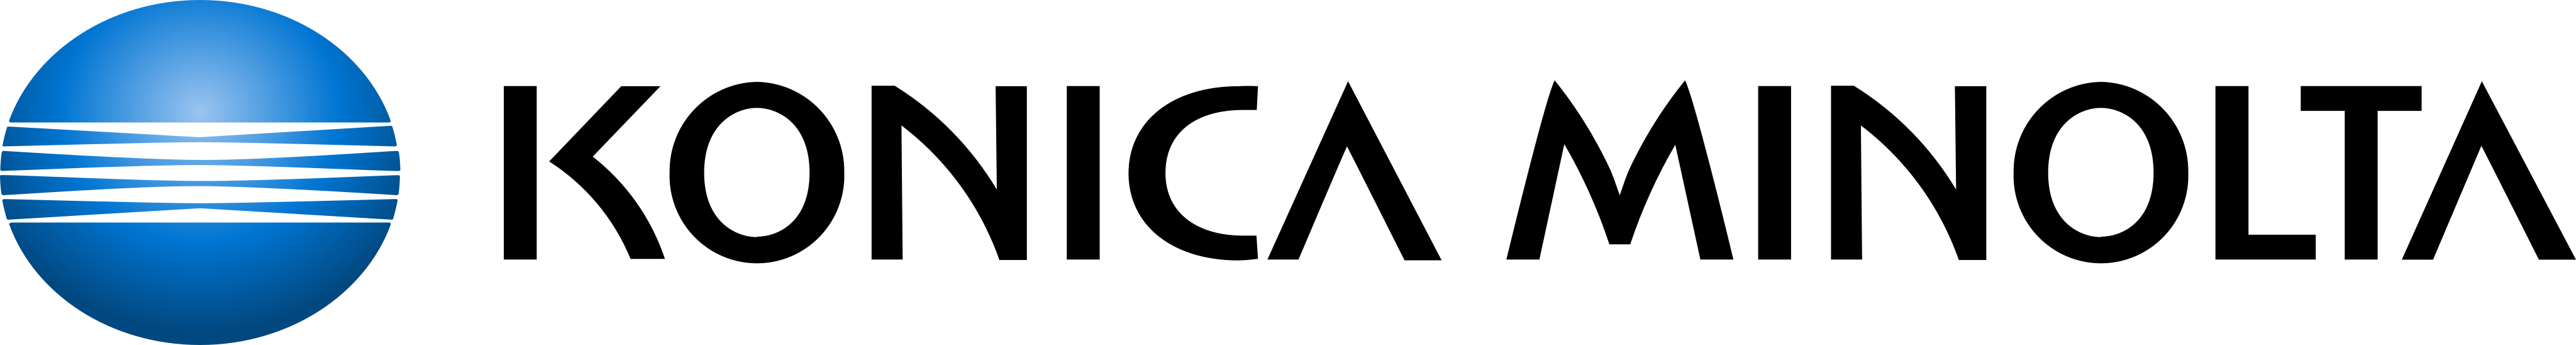 Konica Minolta Logo.